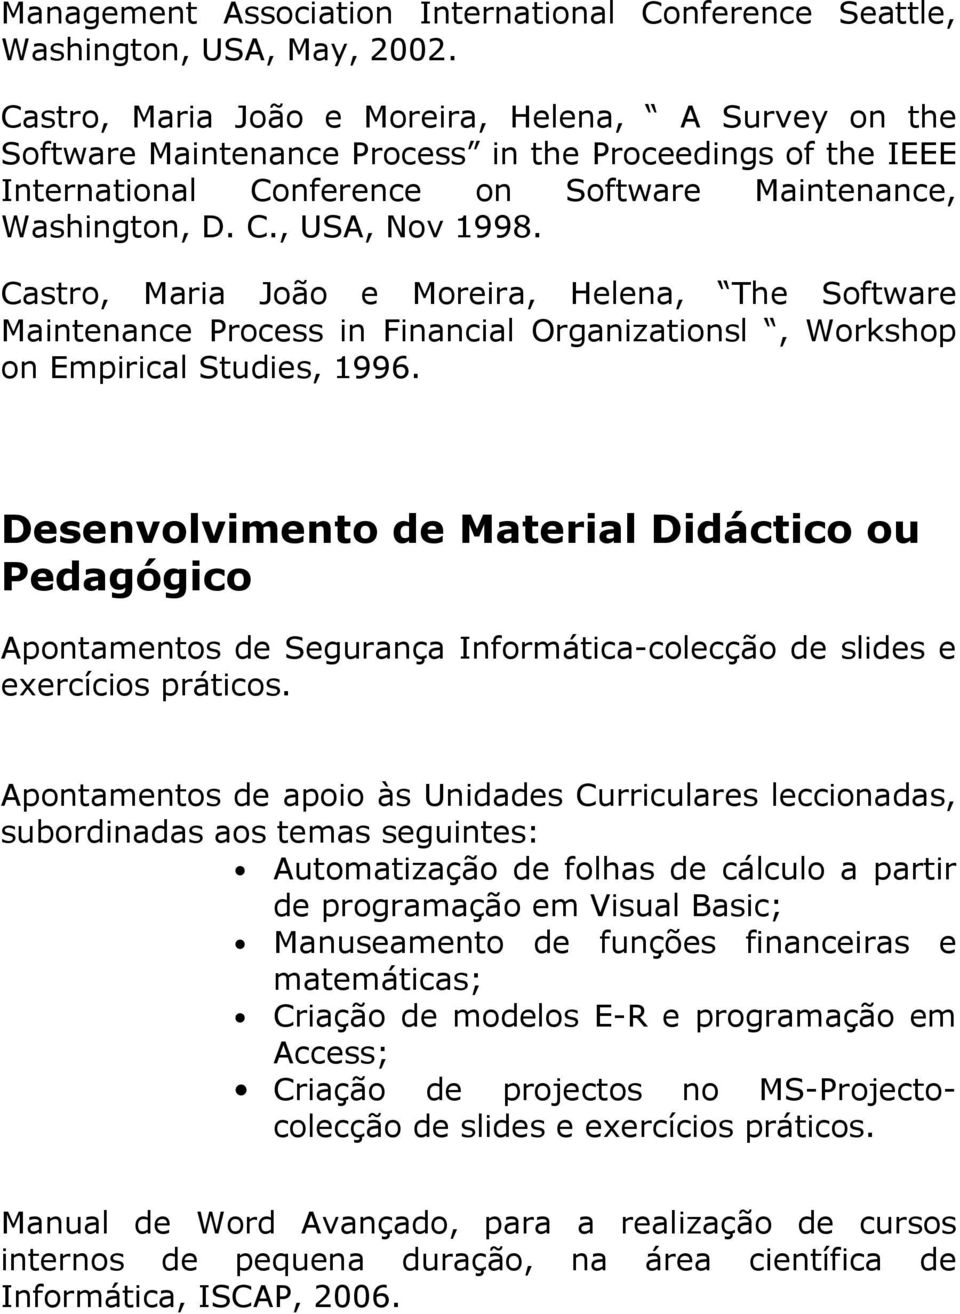 Castro, Maria João e Moreira, Helena, The Software Maintenance Process in Financial Organizationsl, Workshop on Empirical Studies, 1996.